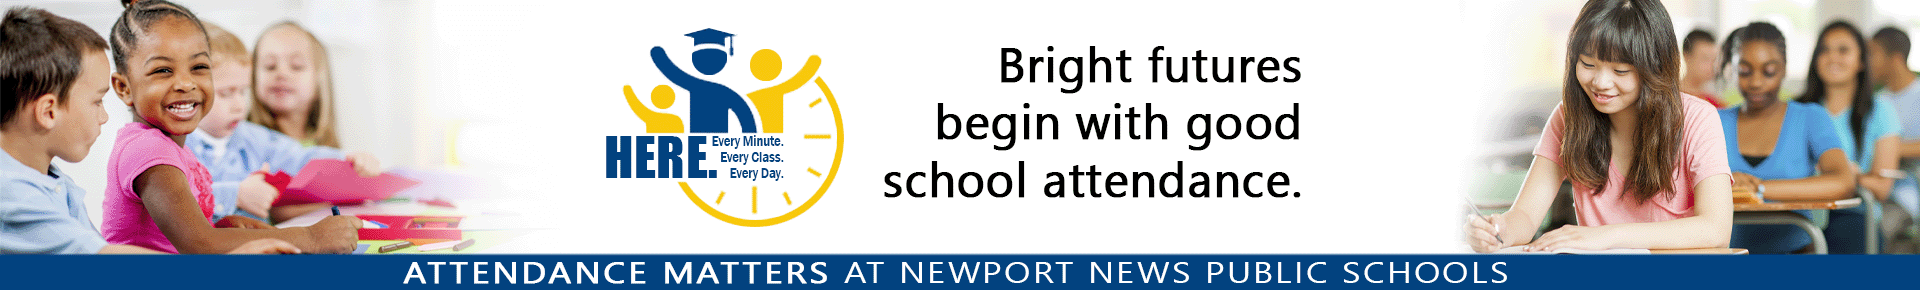 Attendance Matters at Newport News Public Schools